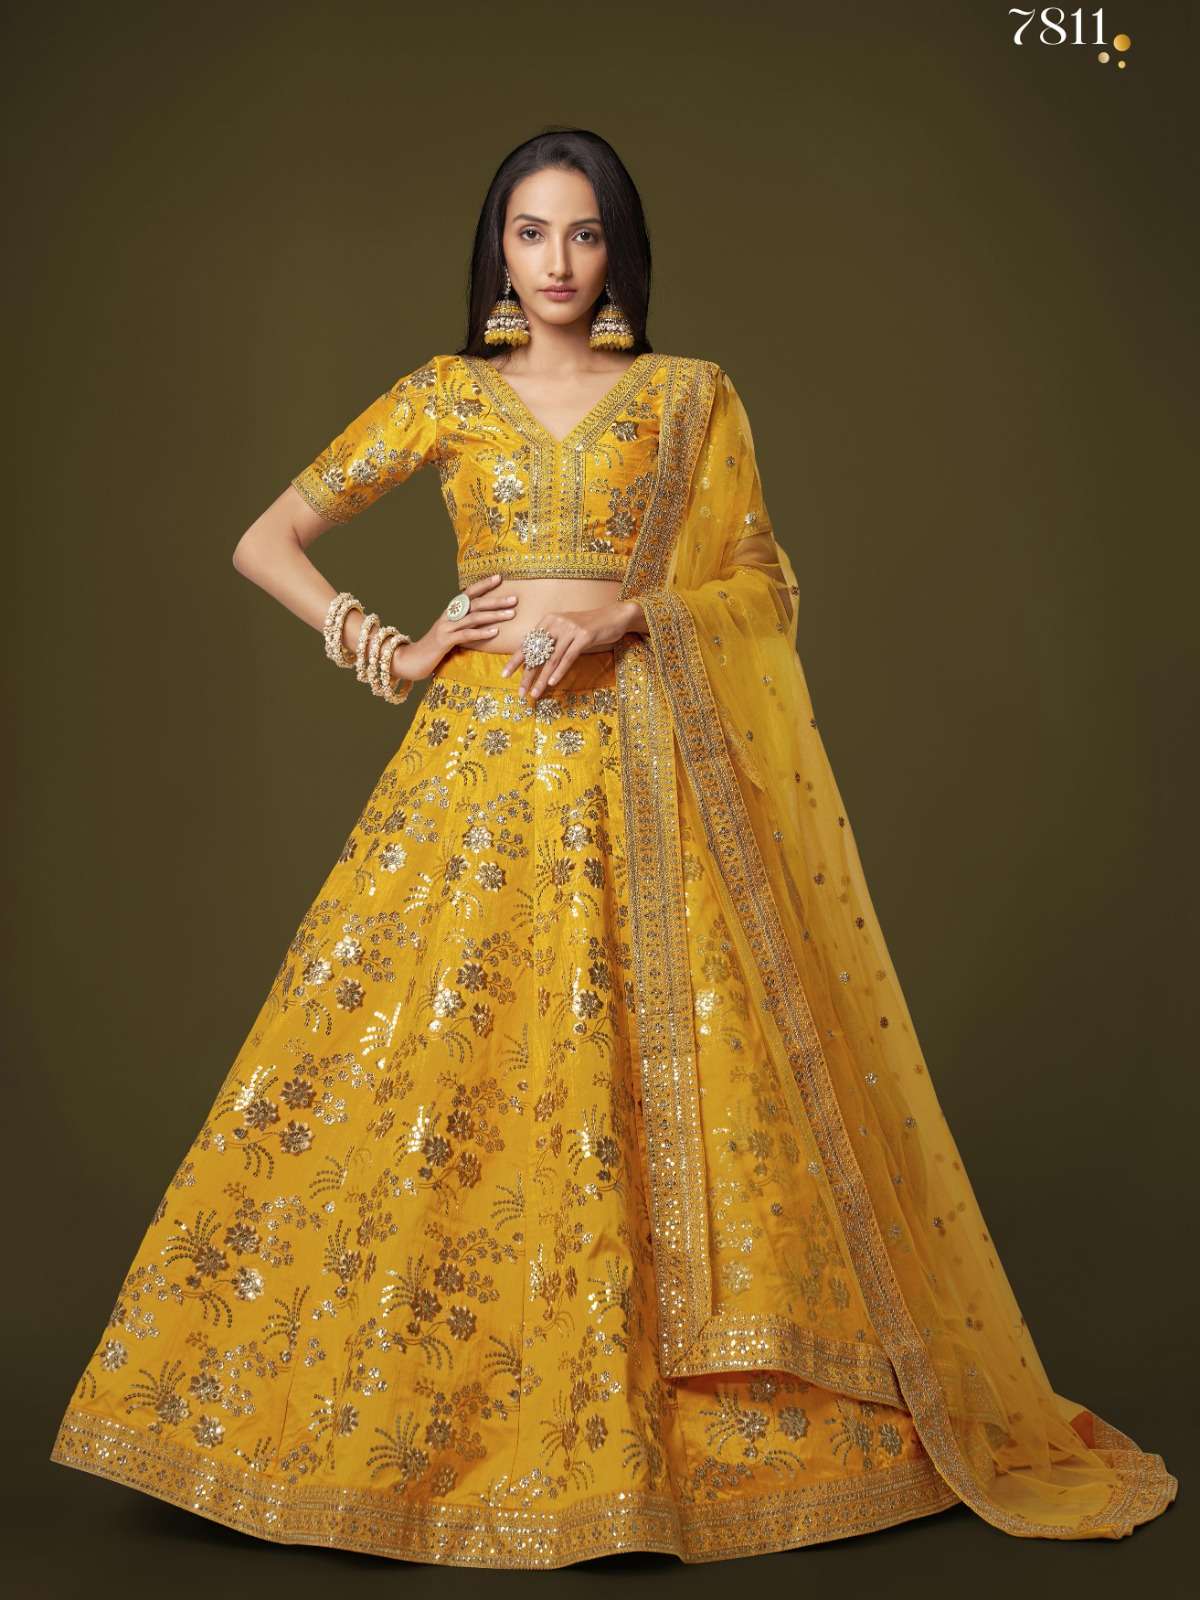 zeel 7811 fancy yellow color beautiful single lehenga choli with soft net dupatta